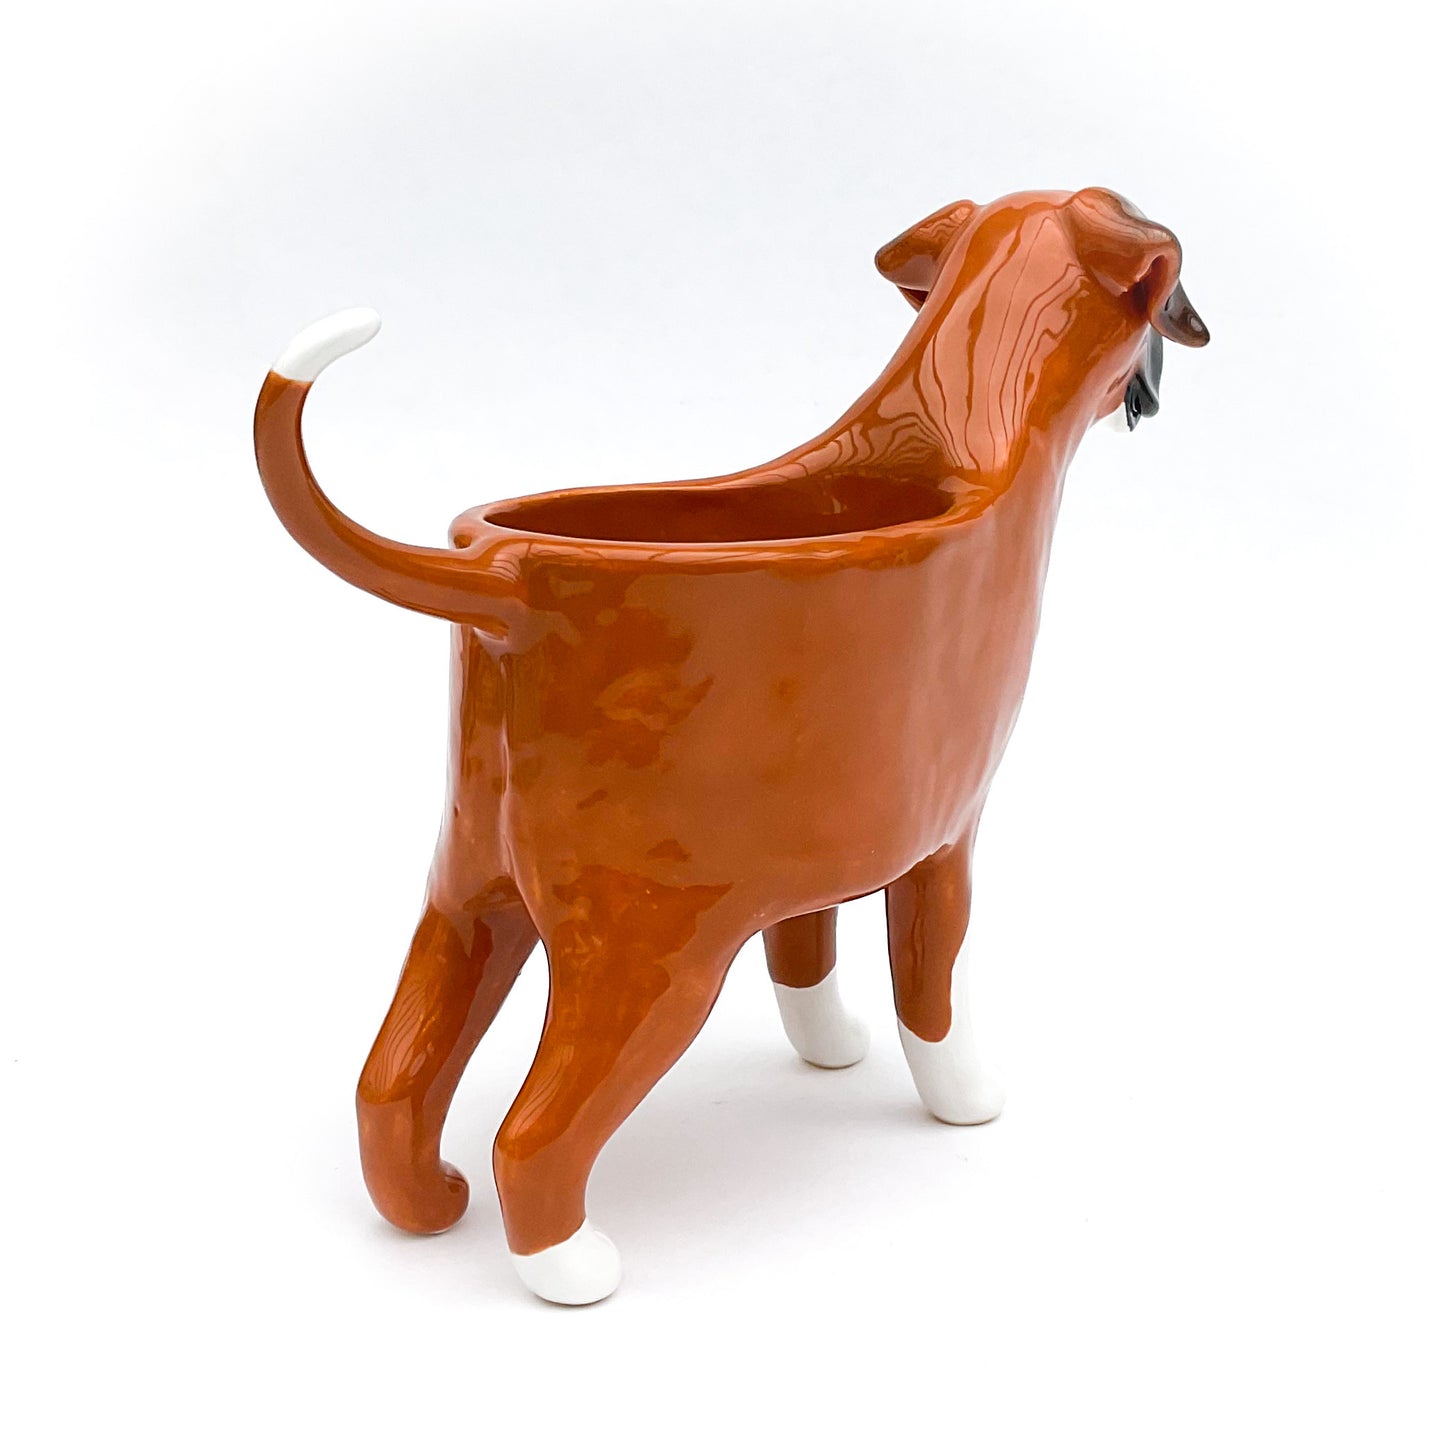 Boxer Dog Planter - Ceramic Dog Plant Pot